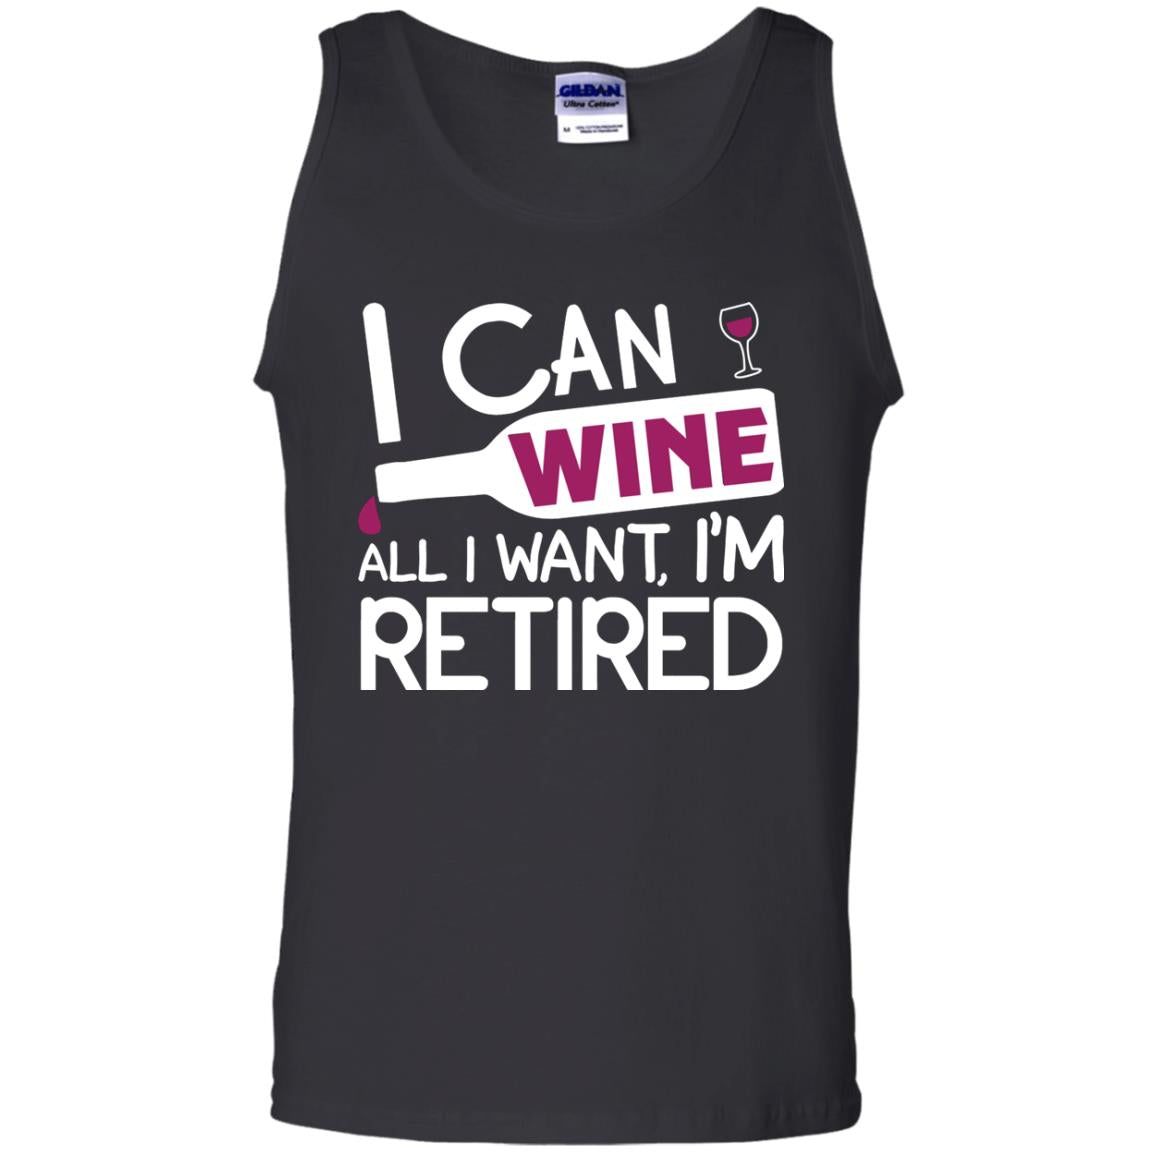 I Can Wine All I Wan't I'm Retired Retirement ShirtG220 Gildan 100% Cotton Tank Top